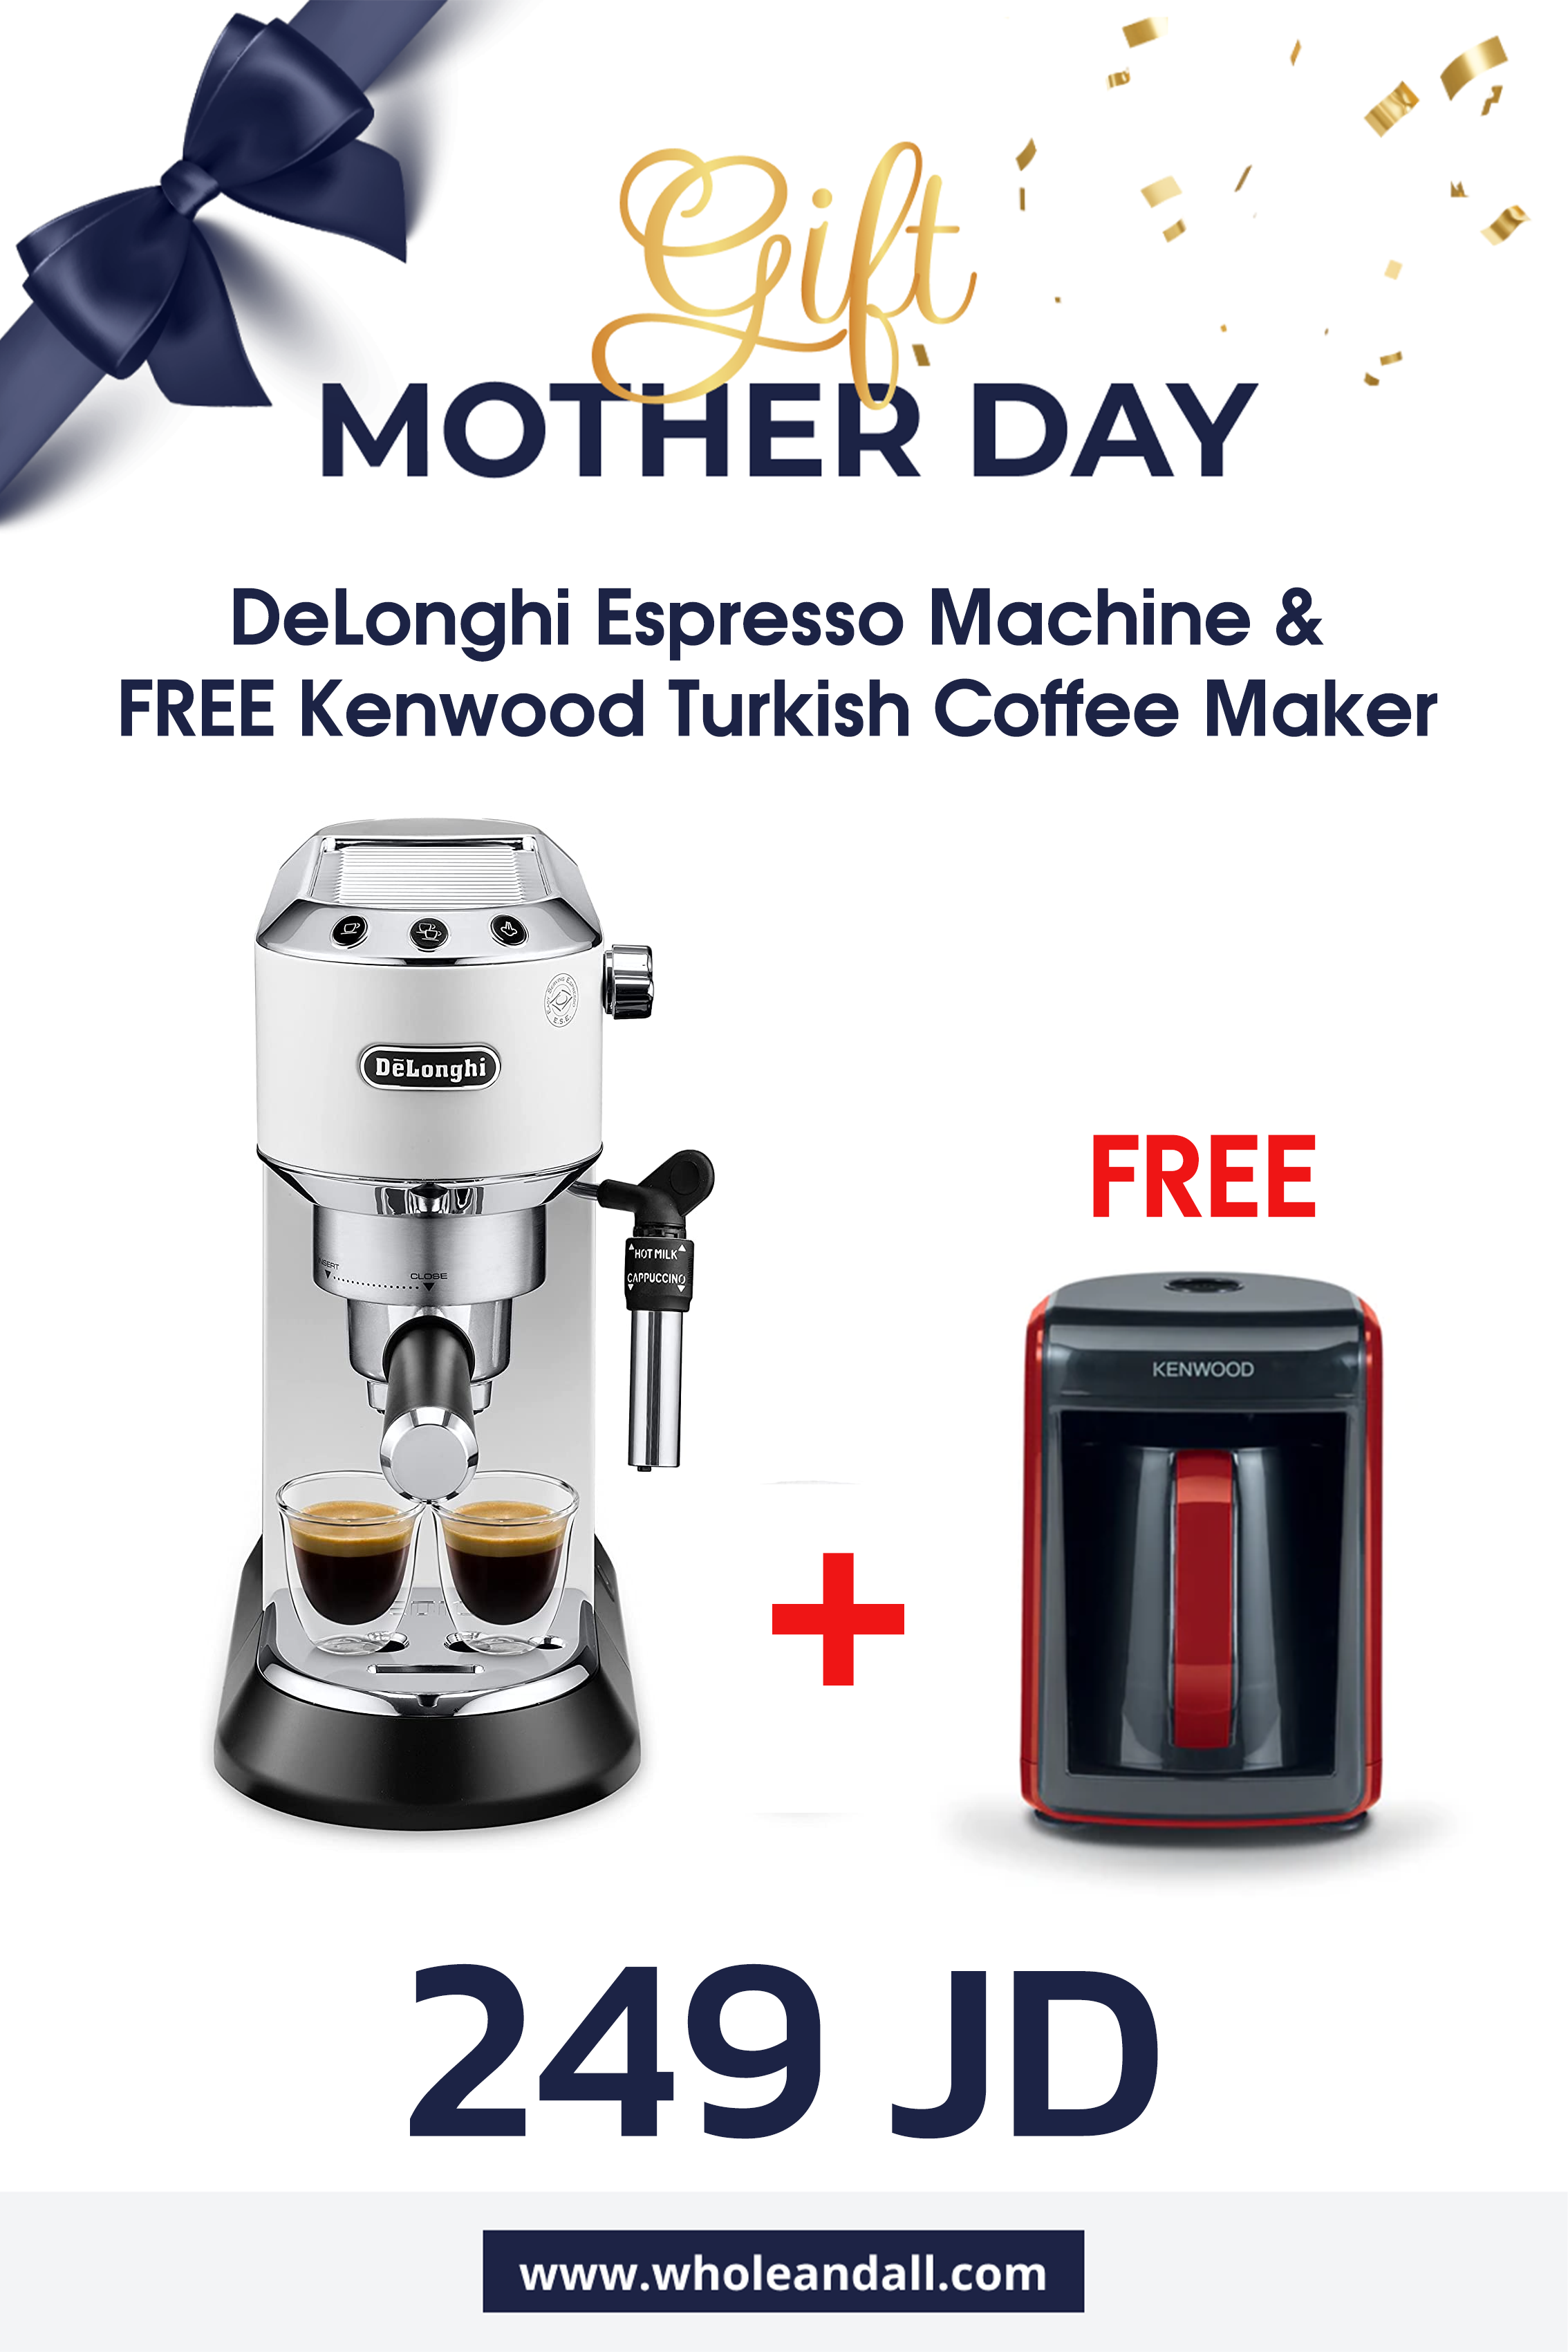 DeLonghi Espresso Machine & FREE Kenwood Turkish Coffee Maker